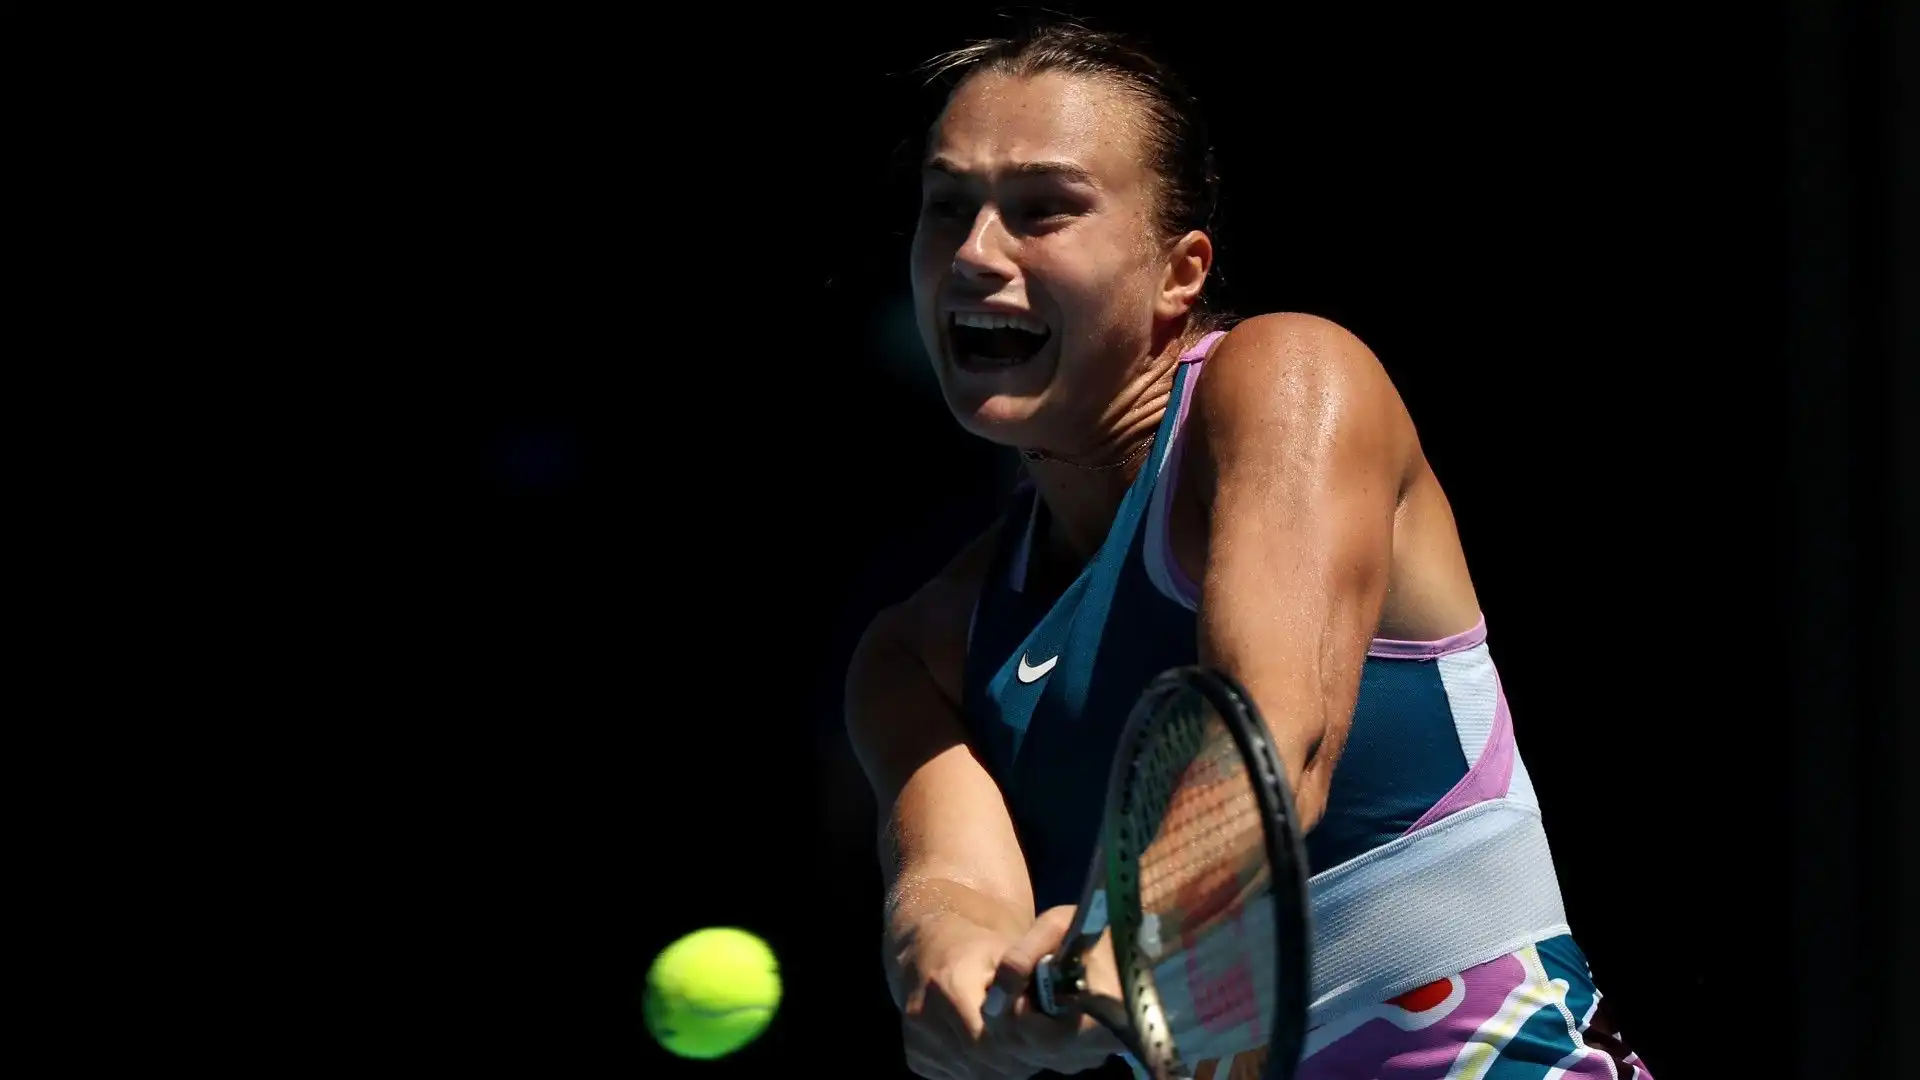 La tennista bielorussa ha vinto contro Belinda Bencic nel quarto turno degli Australian Open 2023